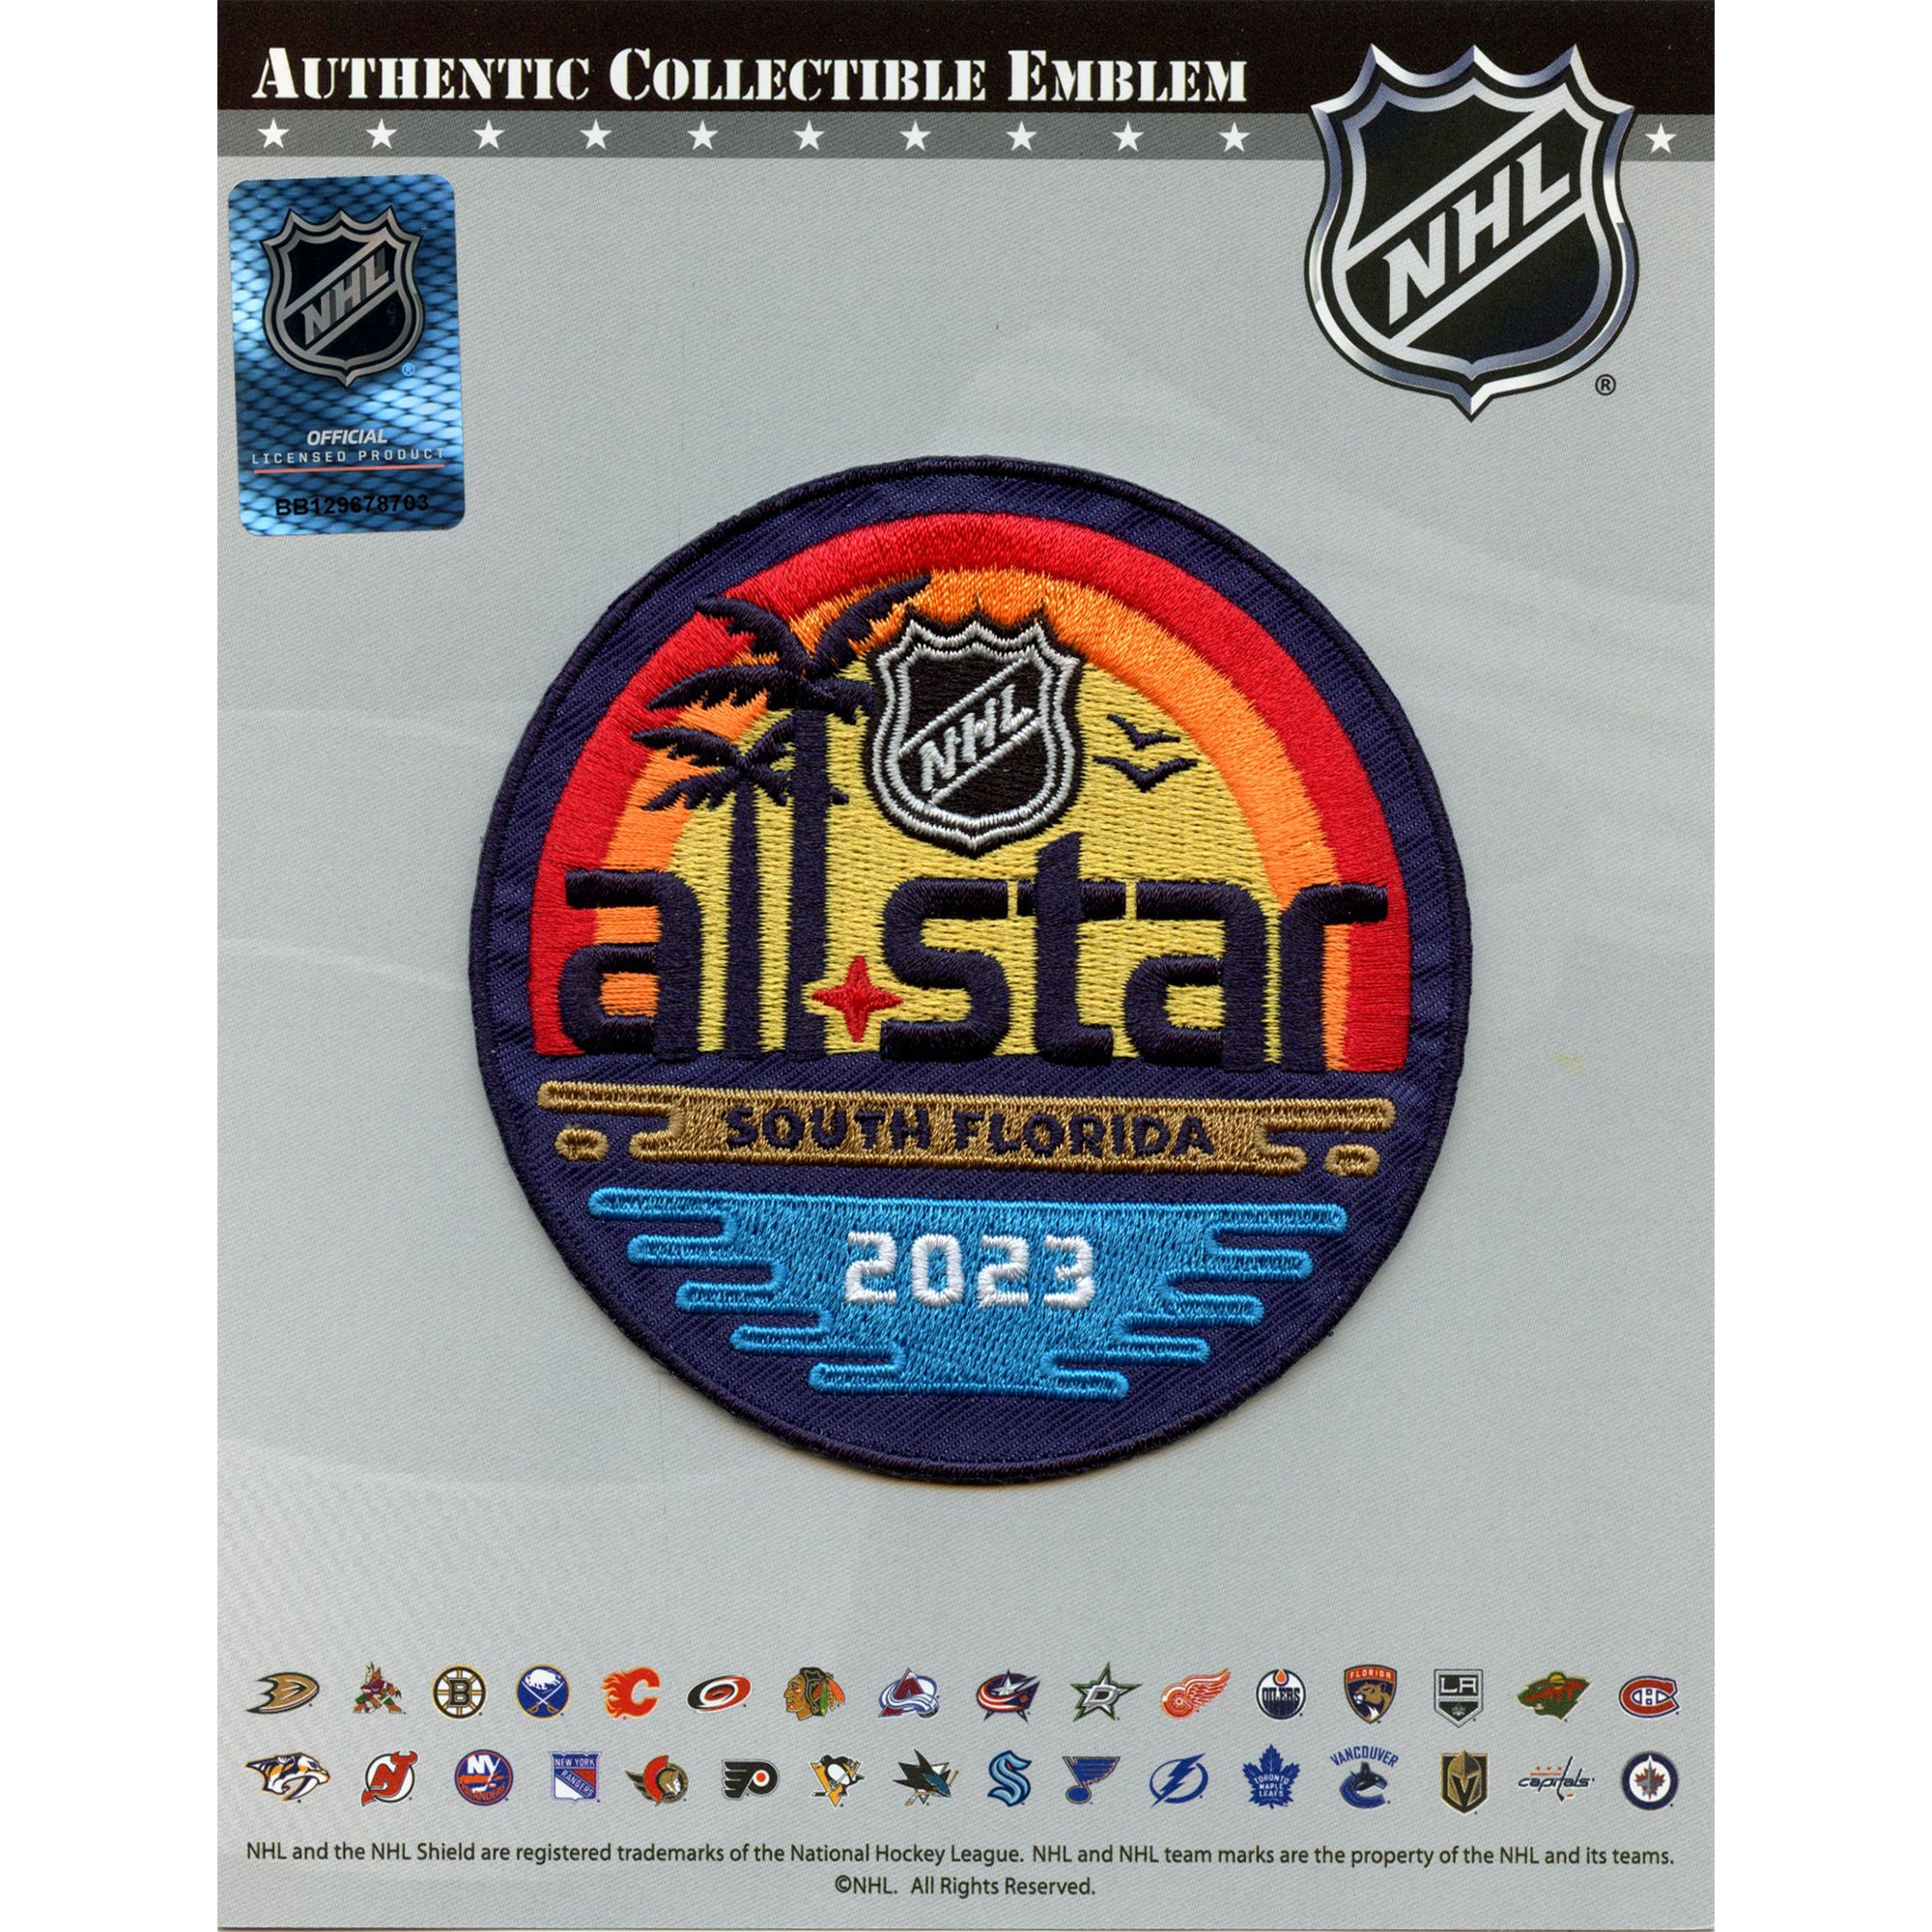 1999 NHL All Star Game Jersey Patch Tampa Bay Lightning Jersey Patch